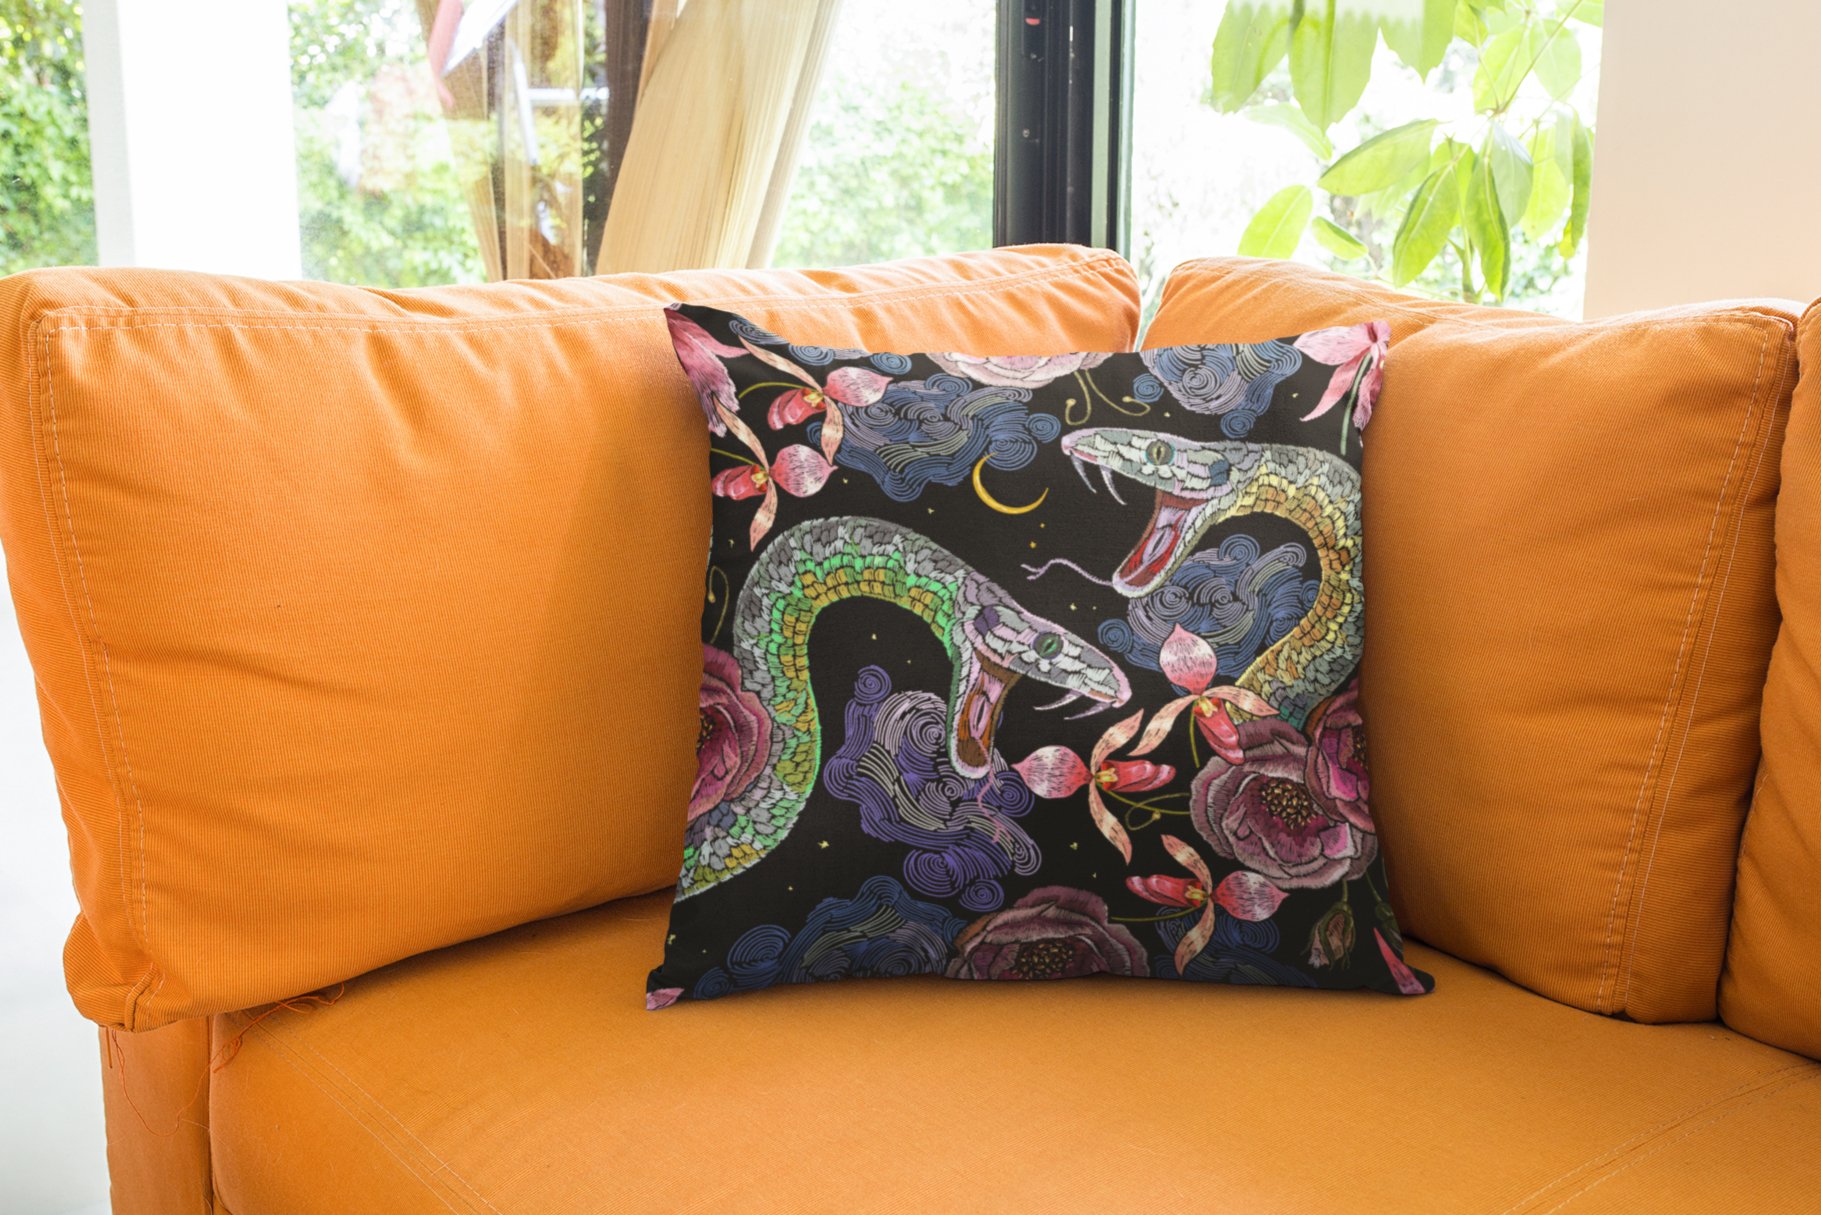 Vivid decorative pillow with a snake print.